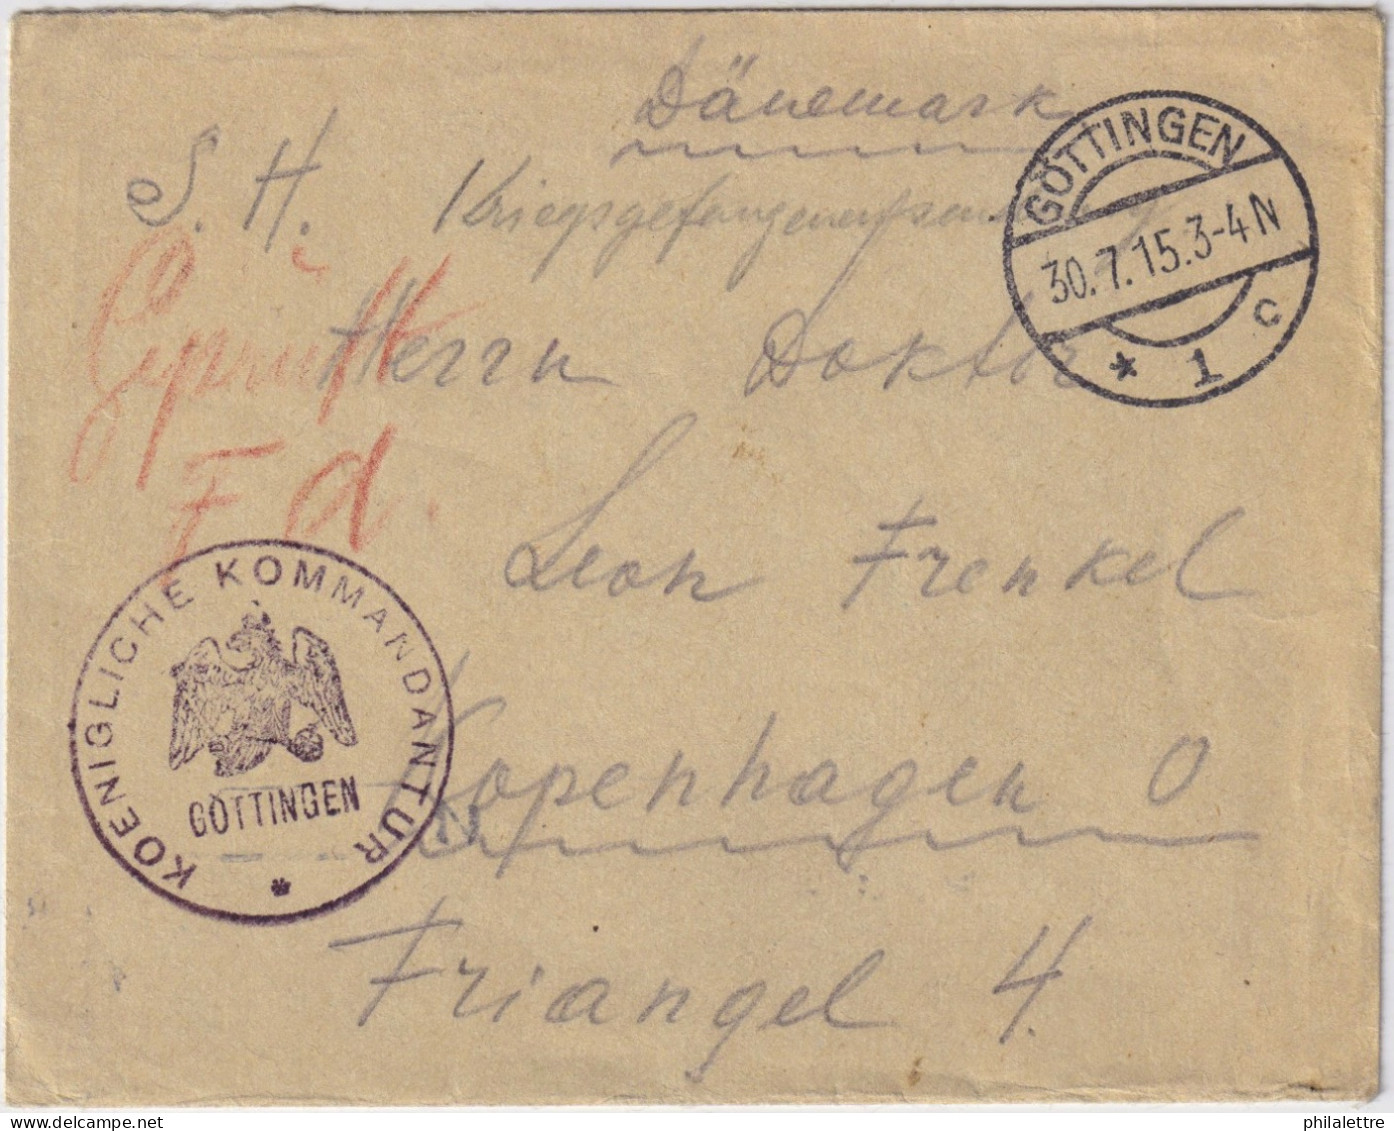 ALLEMAGNE / GERMANY - 1915 POW Cover From An NC Officer In GÖTTINGEN GFLager Addressed To COPENHAGEN, Denmark - Briefe U. Dokumente